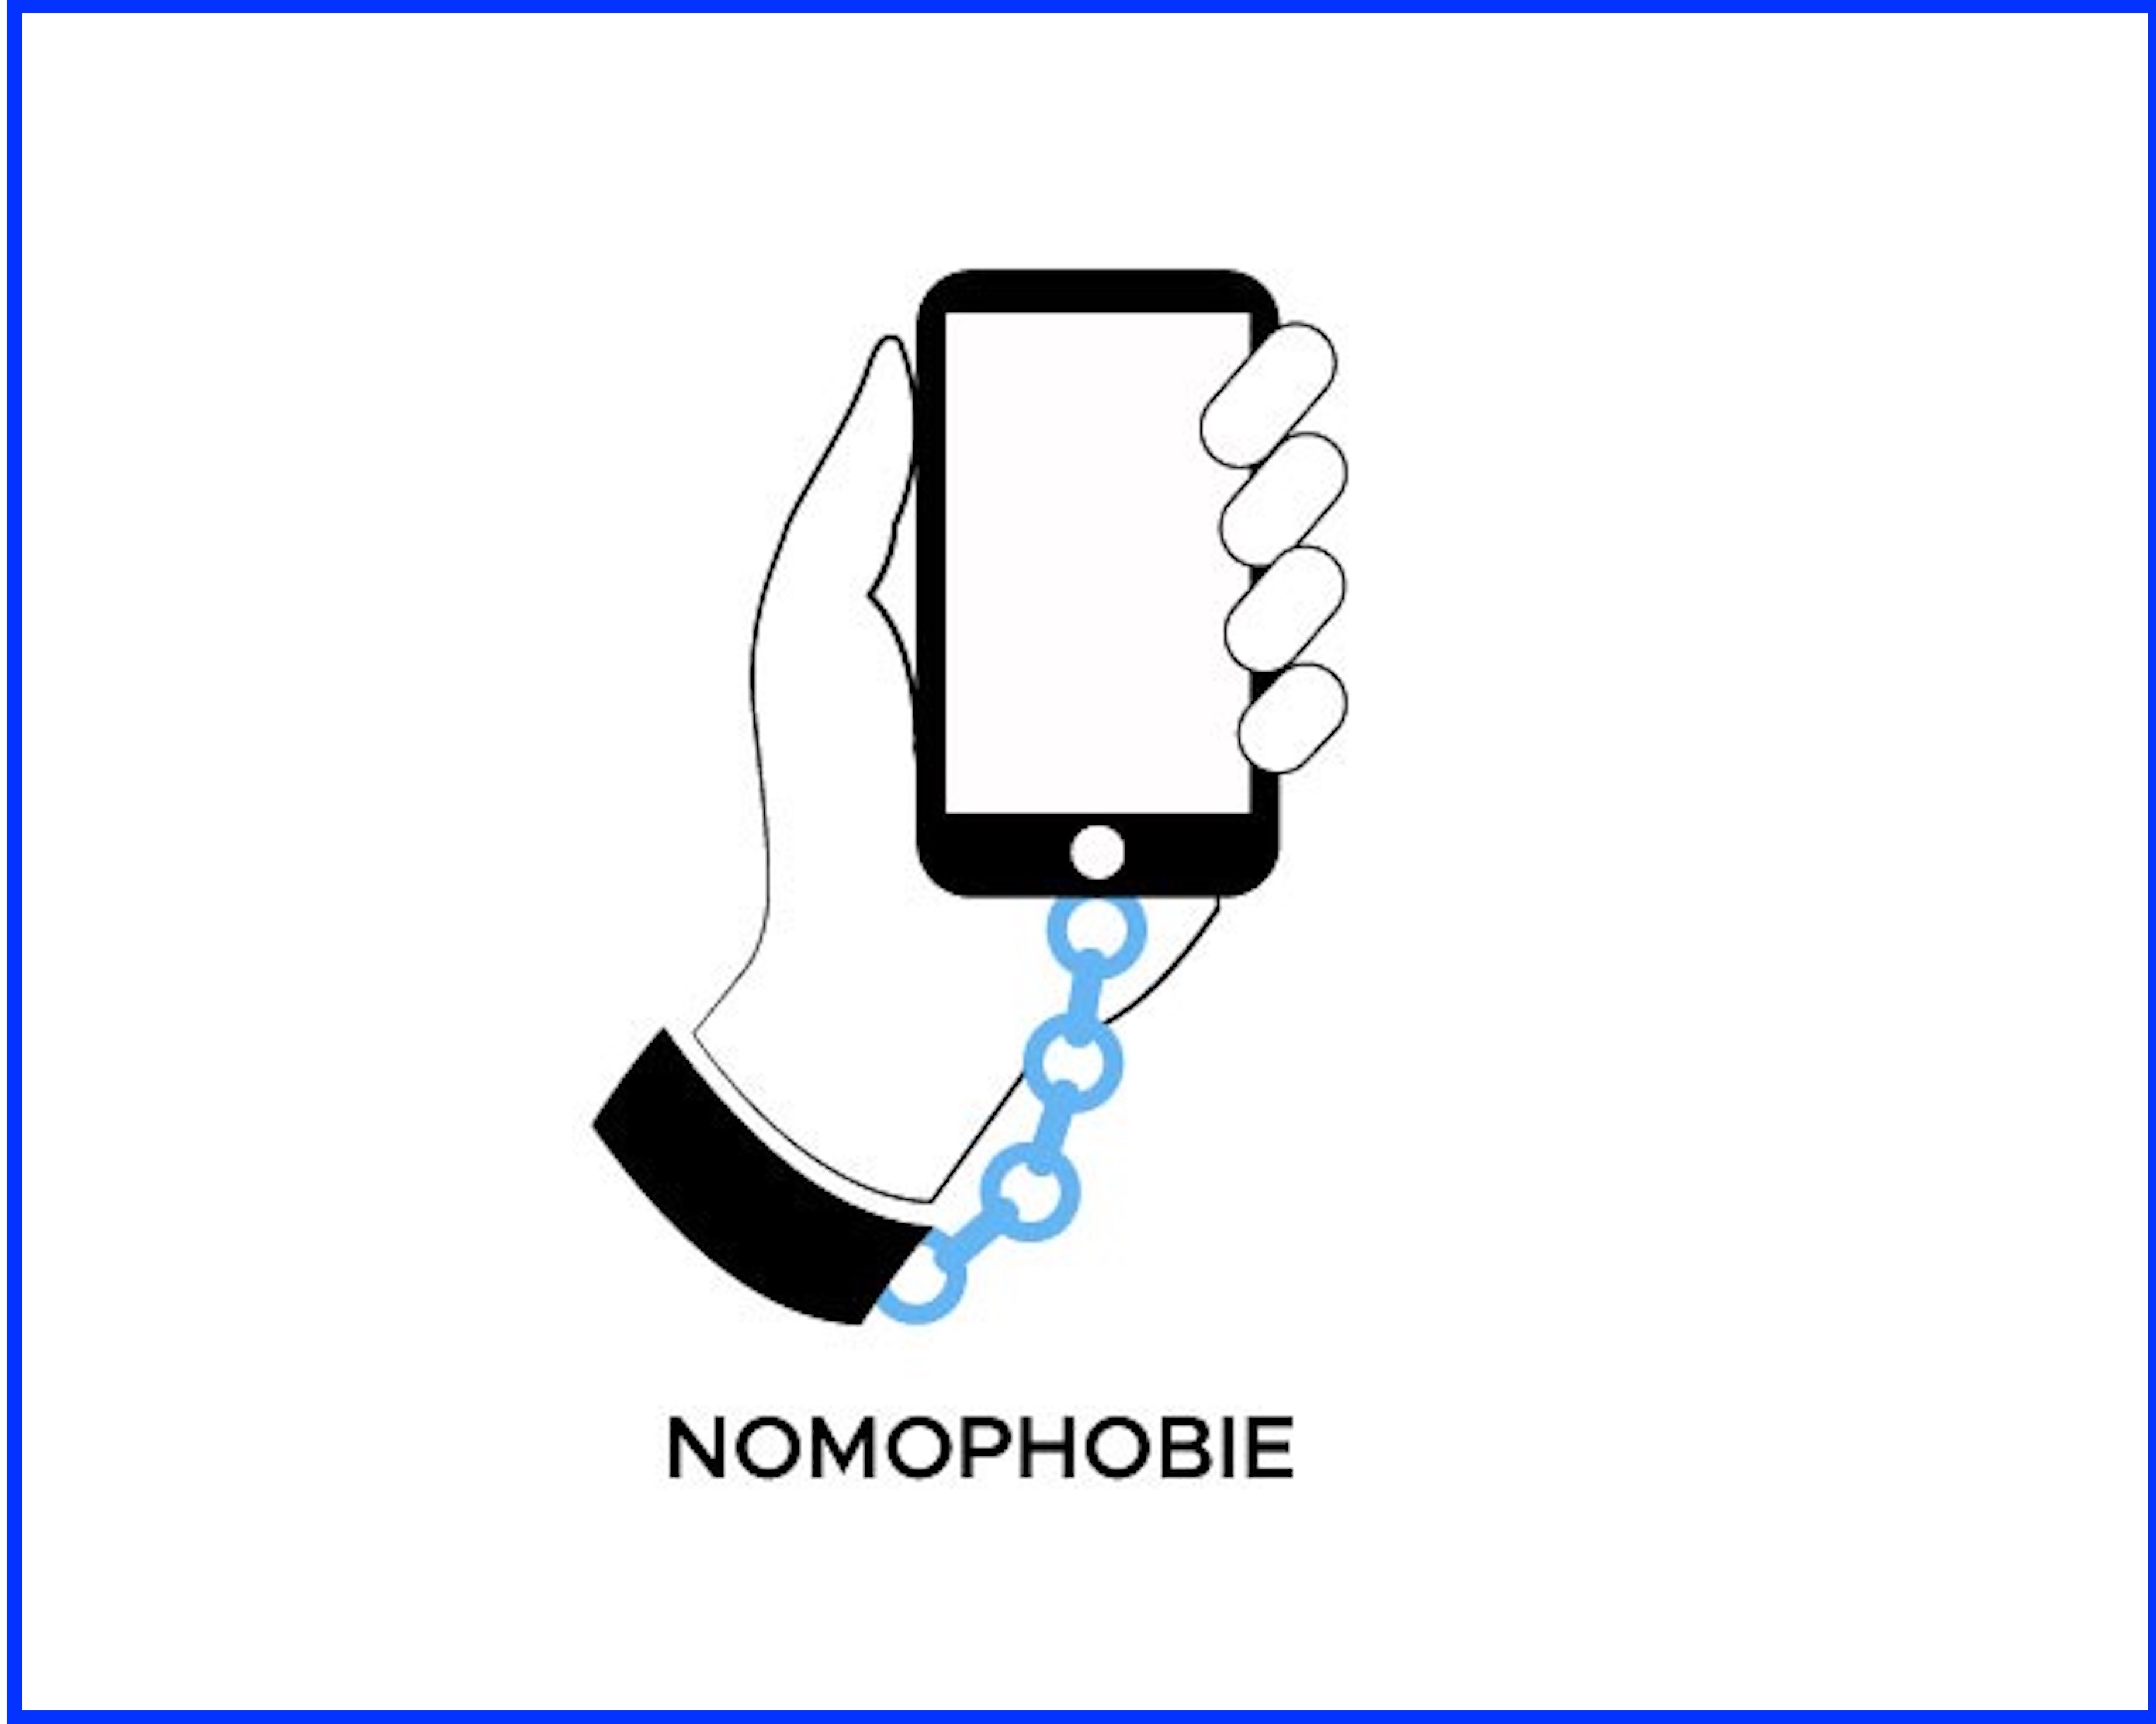 Nomophobia : No mobile (phone) Phobia.